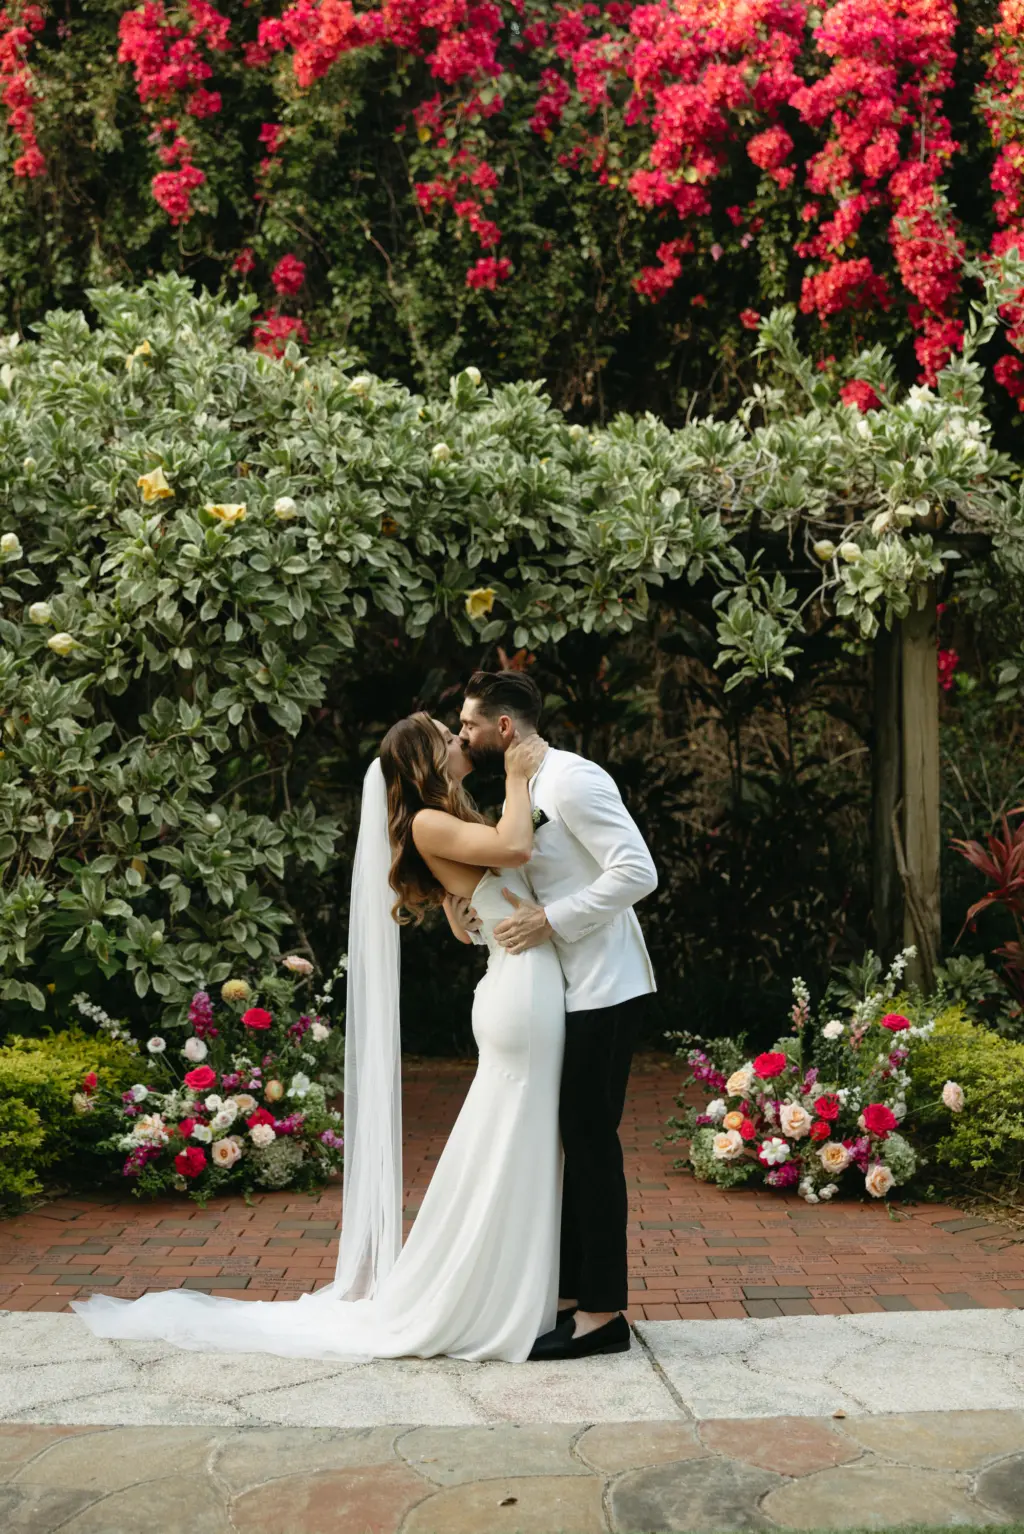 Bride and Groom First Kiss Wedding Portrait | St. Petersburg Florida Outdoor Event Venue Sunken Gardens